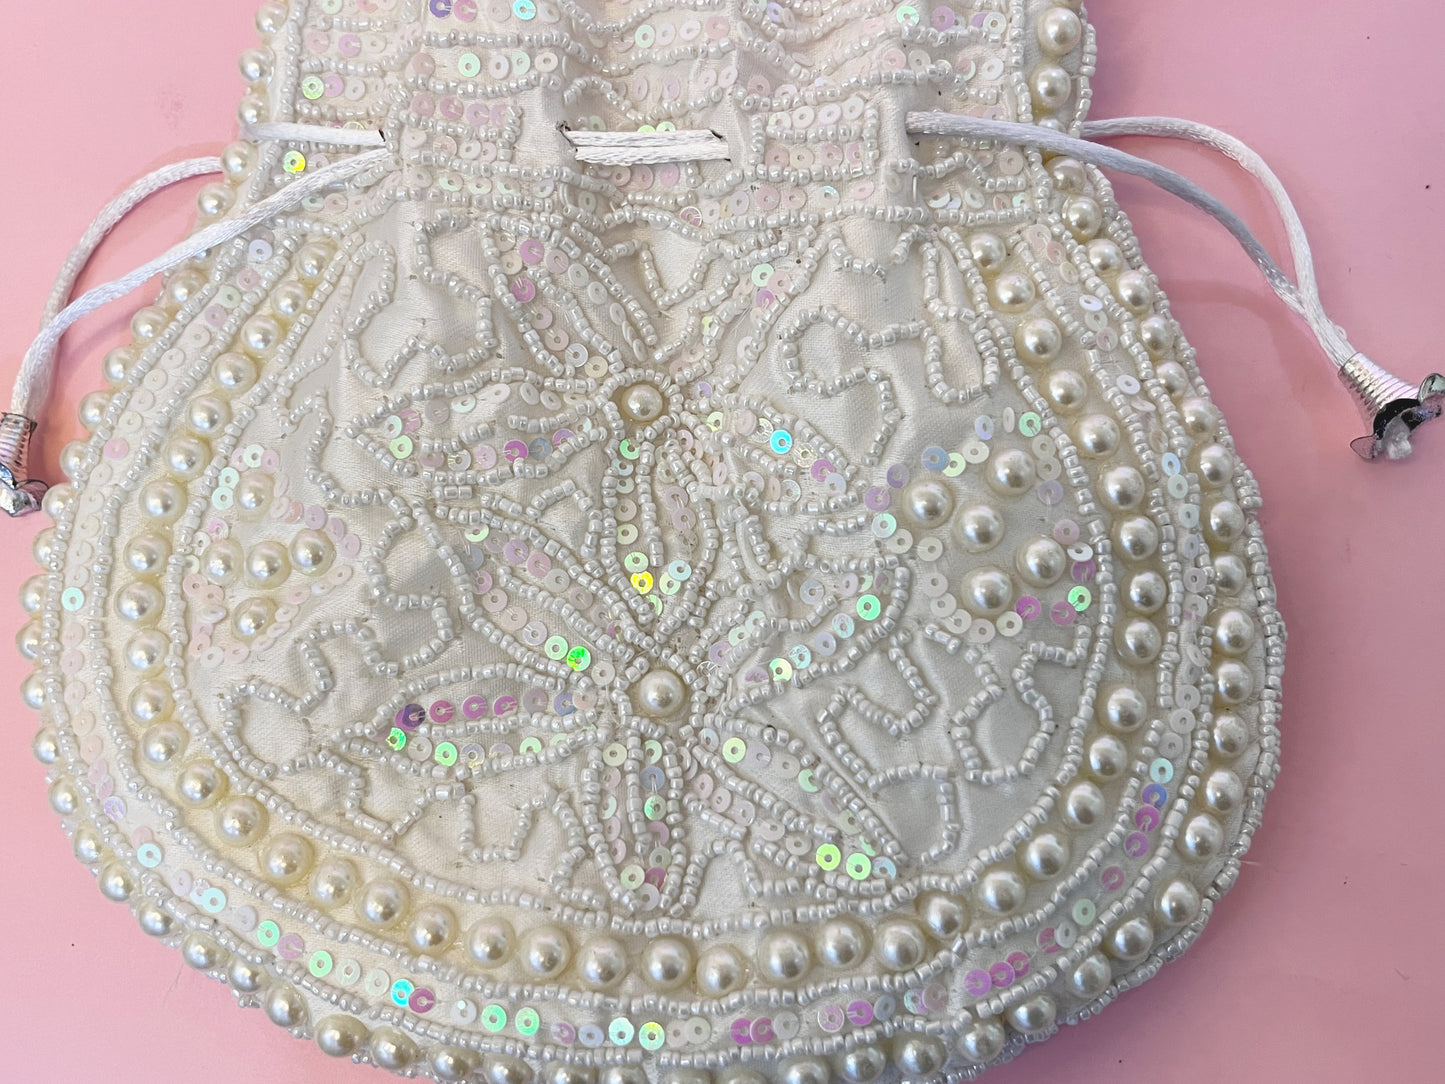 BATUTA -Embellished Silk Potli Bag with Protective Bag, Handbag, Wristlets, Clutch for Women, Girls with Handmade Embroidery, Sequin, Beads Work for Parties, Weddings